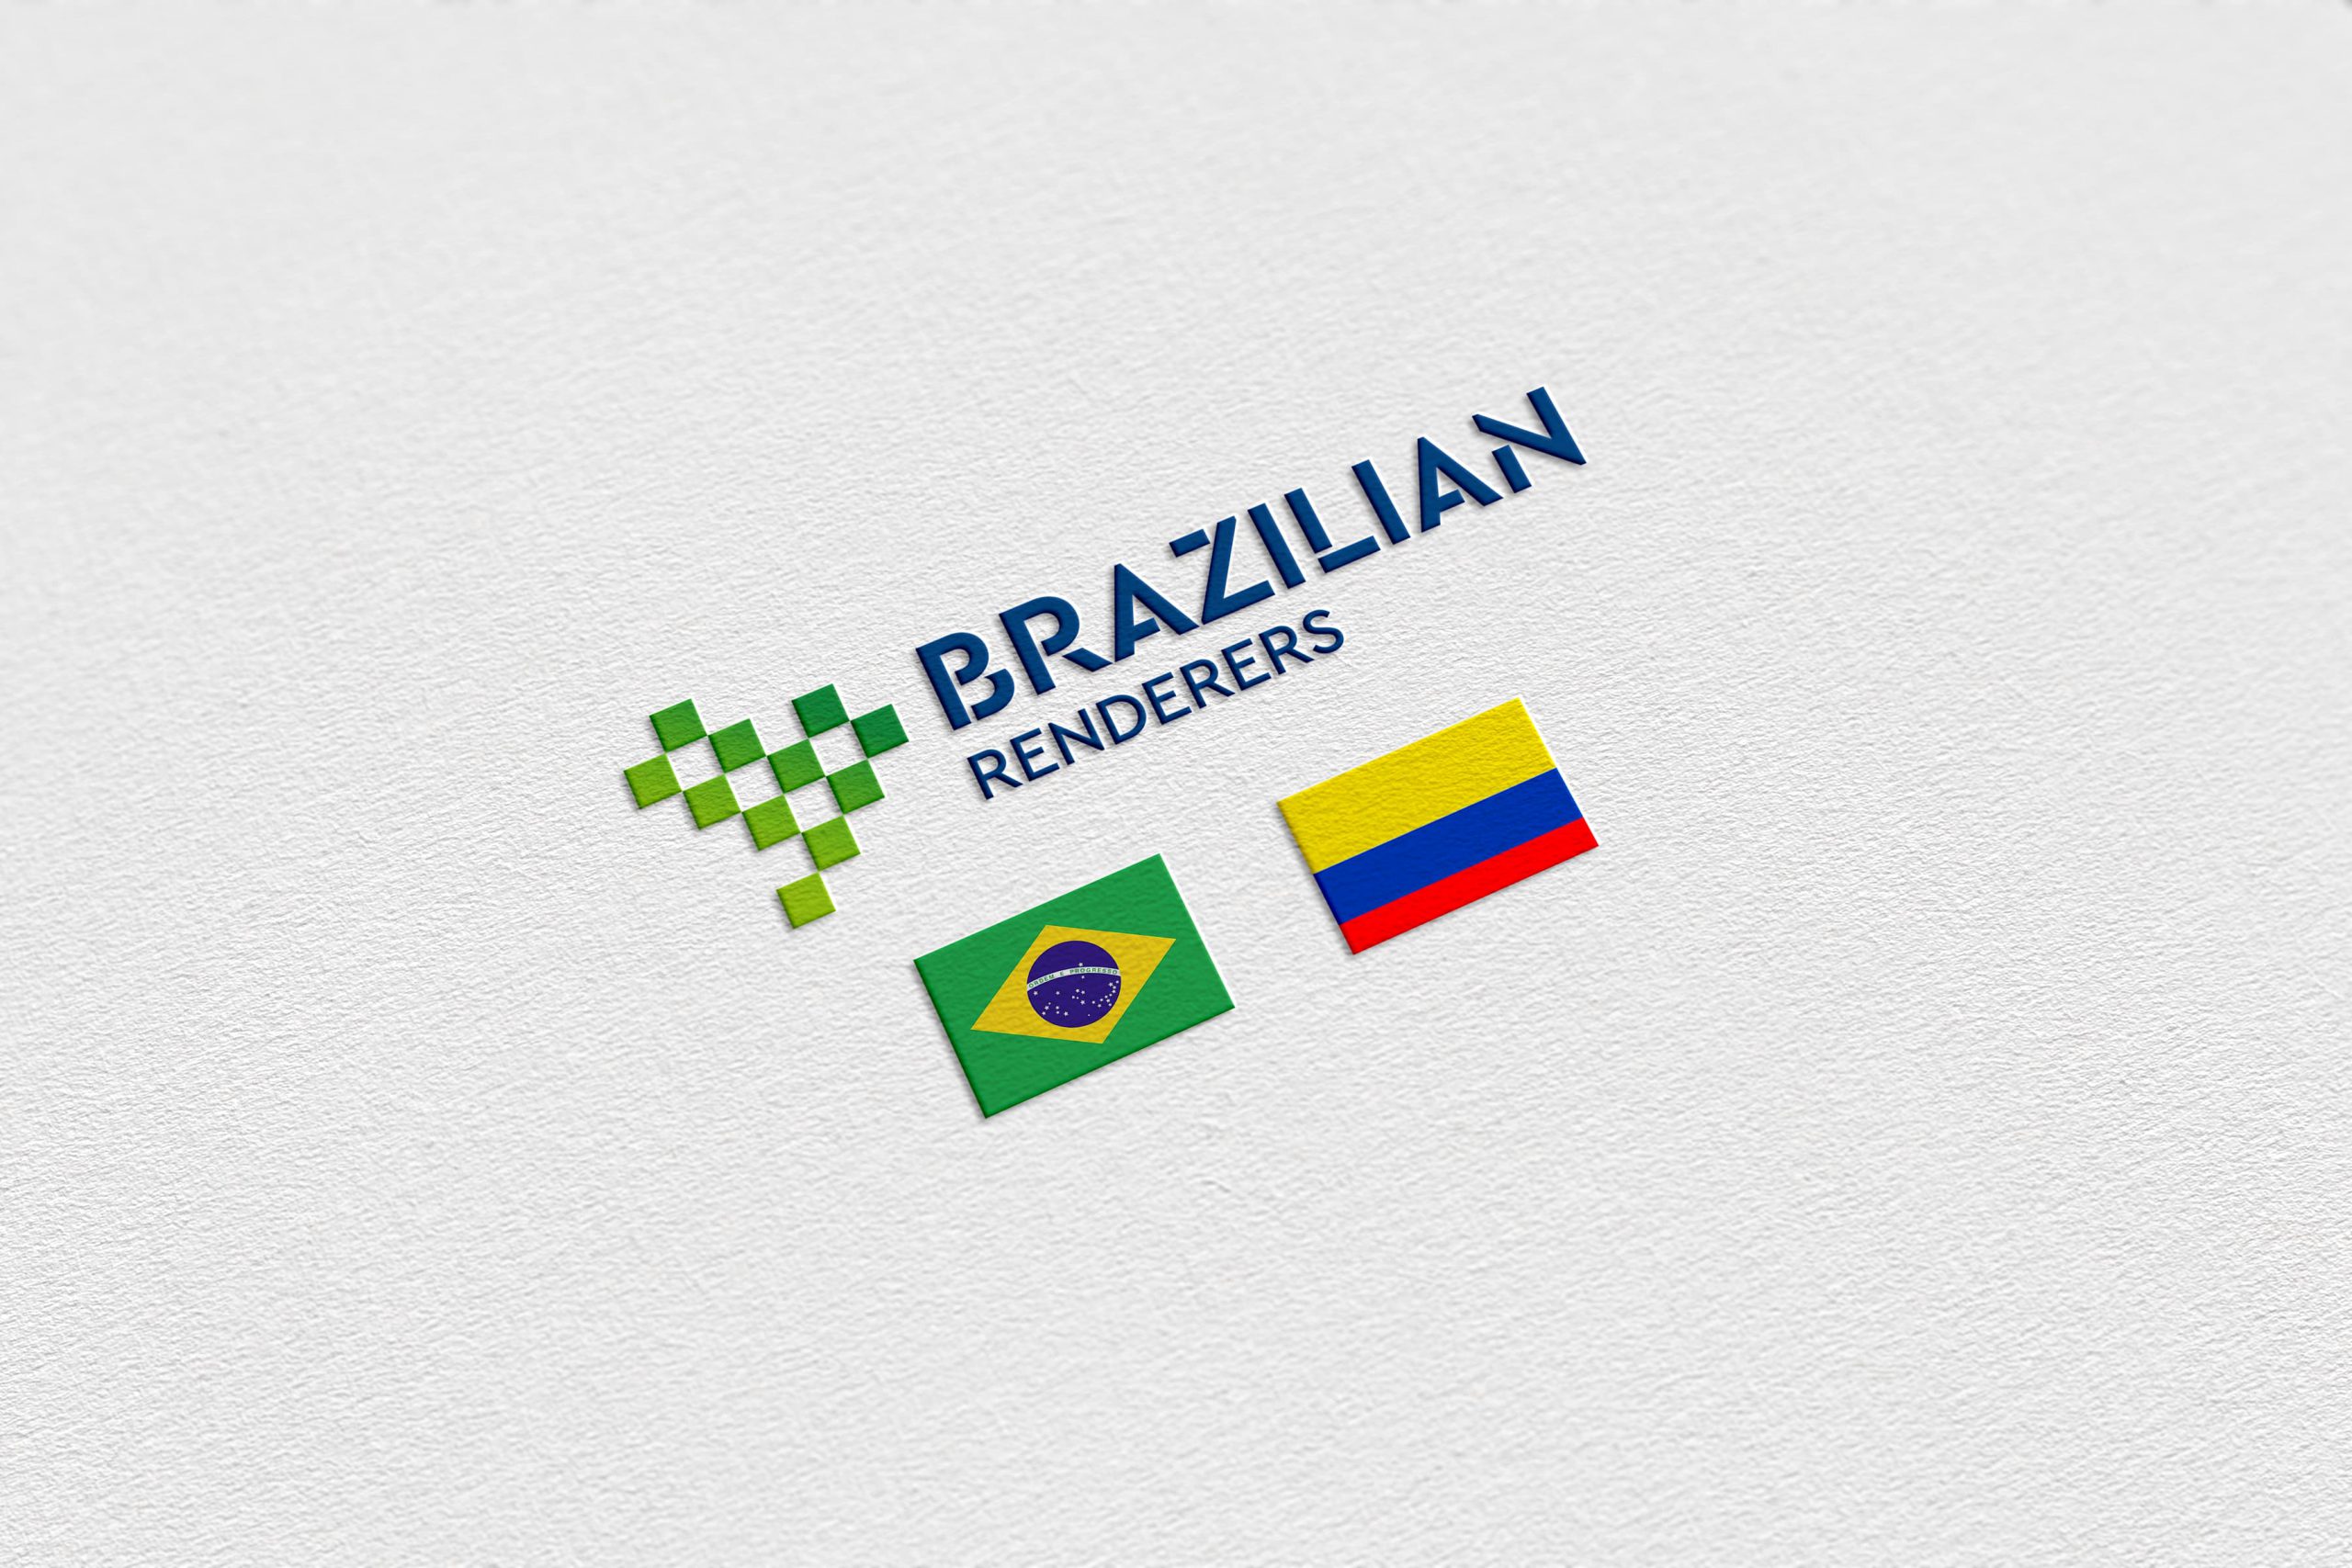 Projeto Brazilian Renderers organiza nova Rodada de Negócios na Colômbia, em outubro, na AgroExpo Corferias 2021